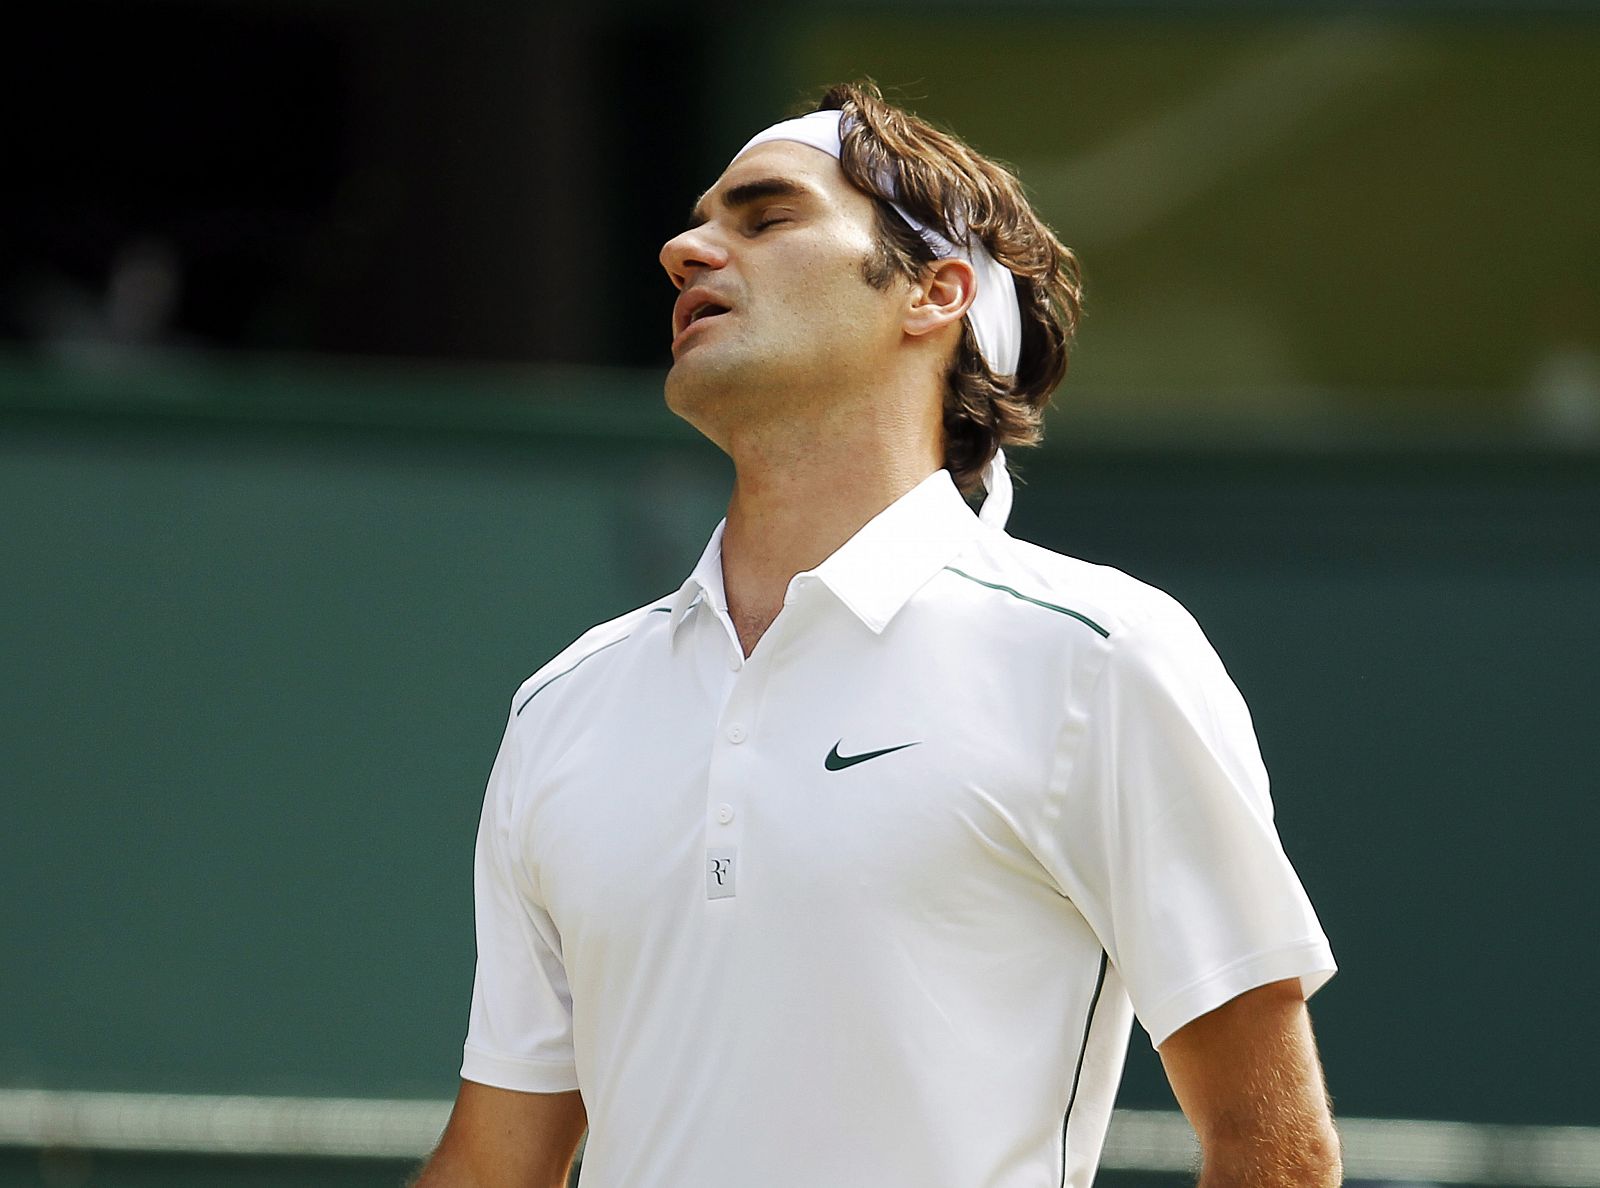 El tenista suizo Roger Federer se lamenta tras perder un punto frente al francés Jo-Wilfried Tsonga.